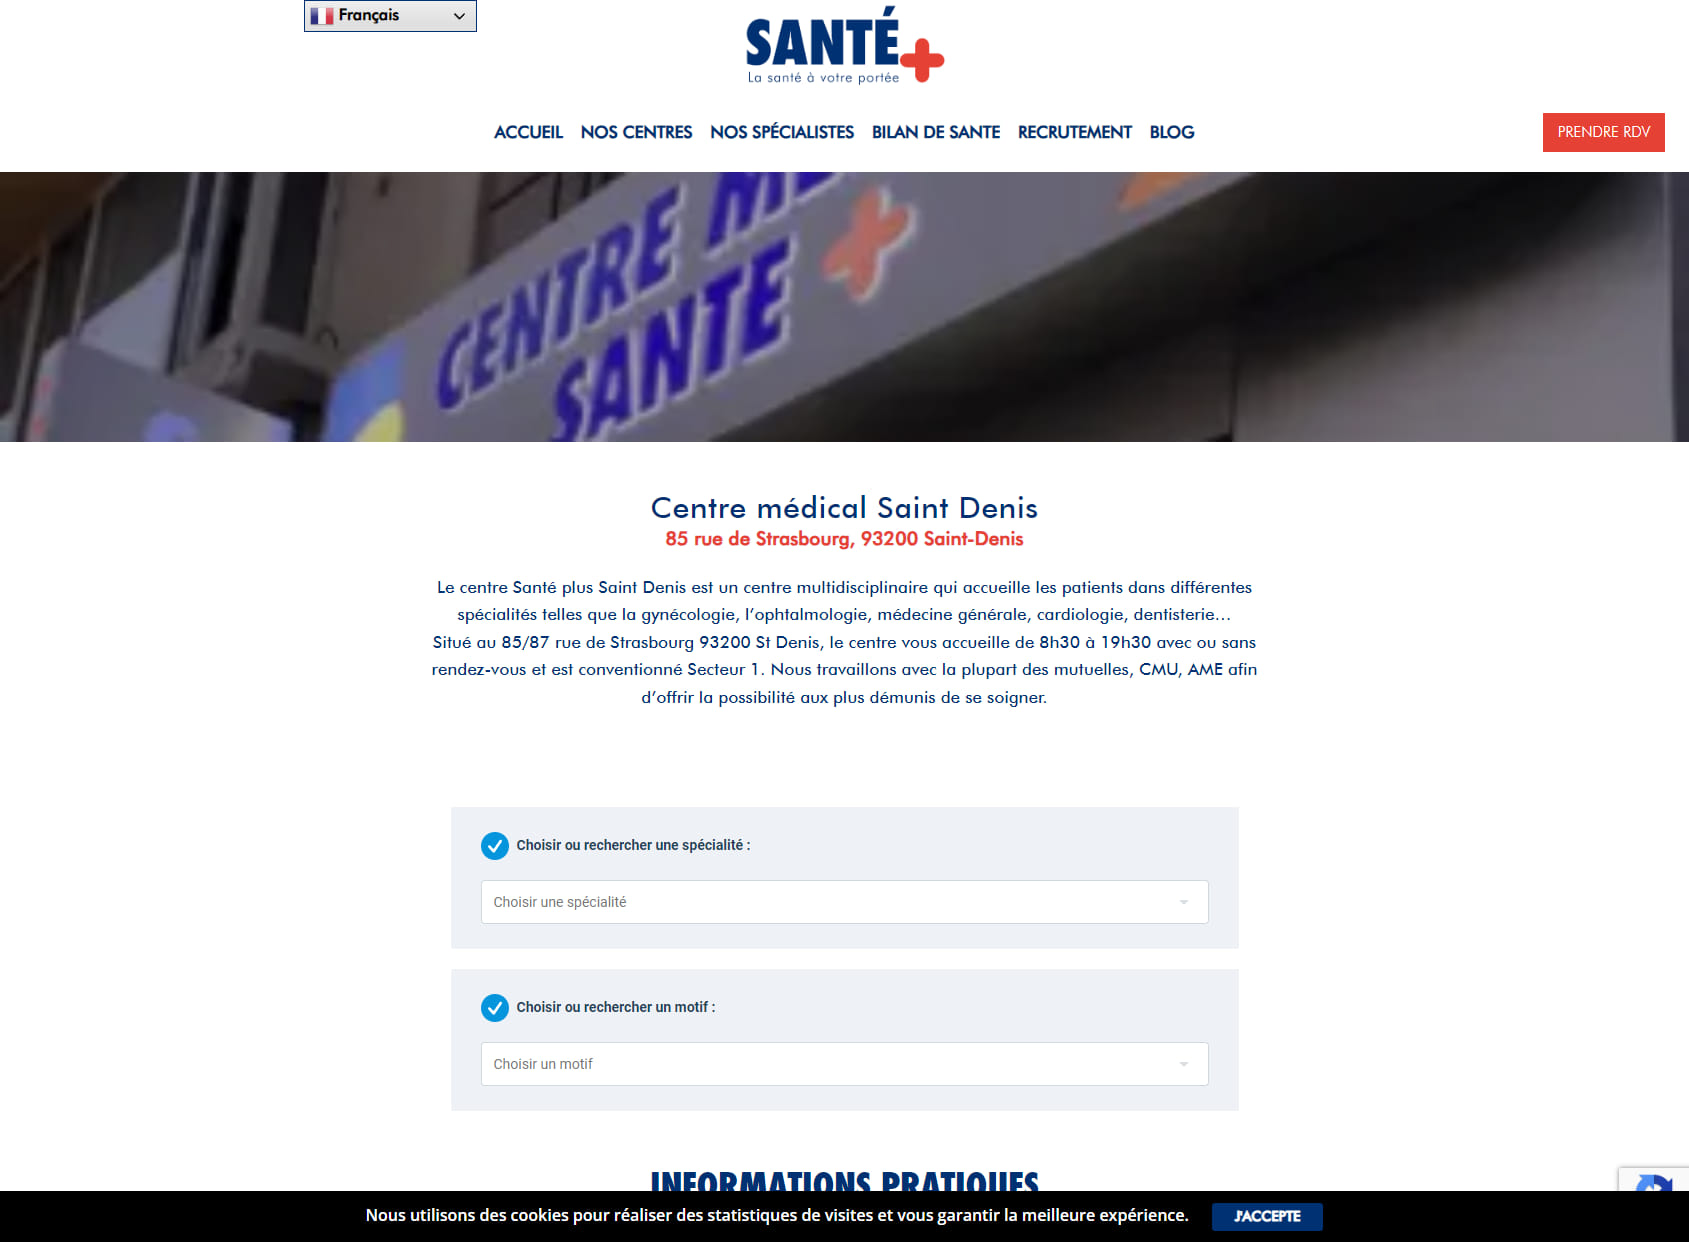 Center Medical - Dentistry - Ophthalmic Saint Denis